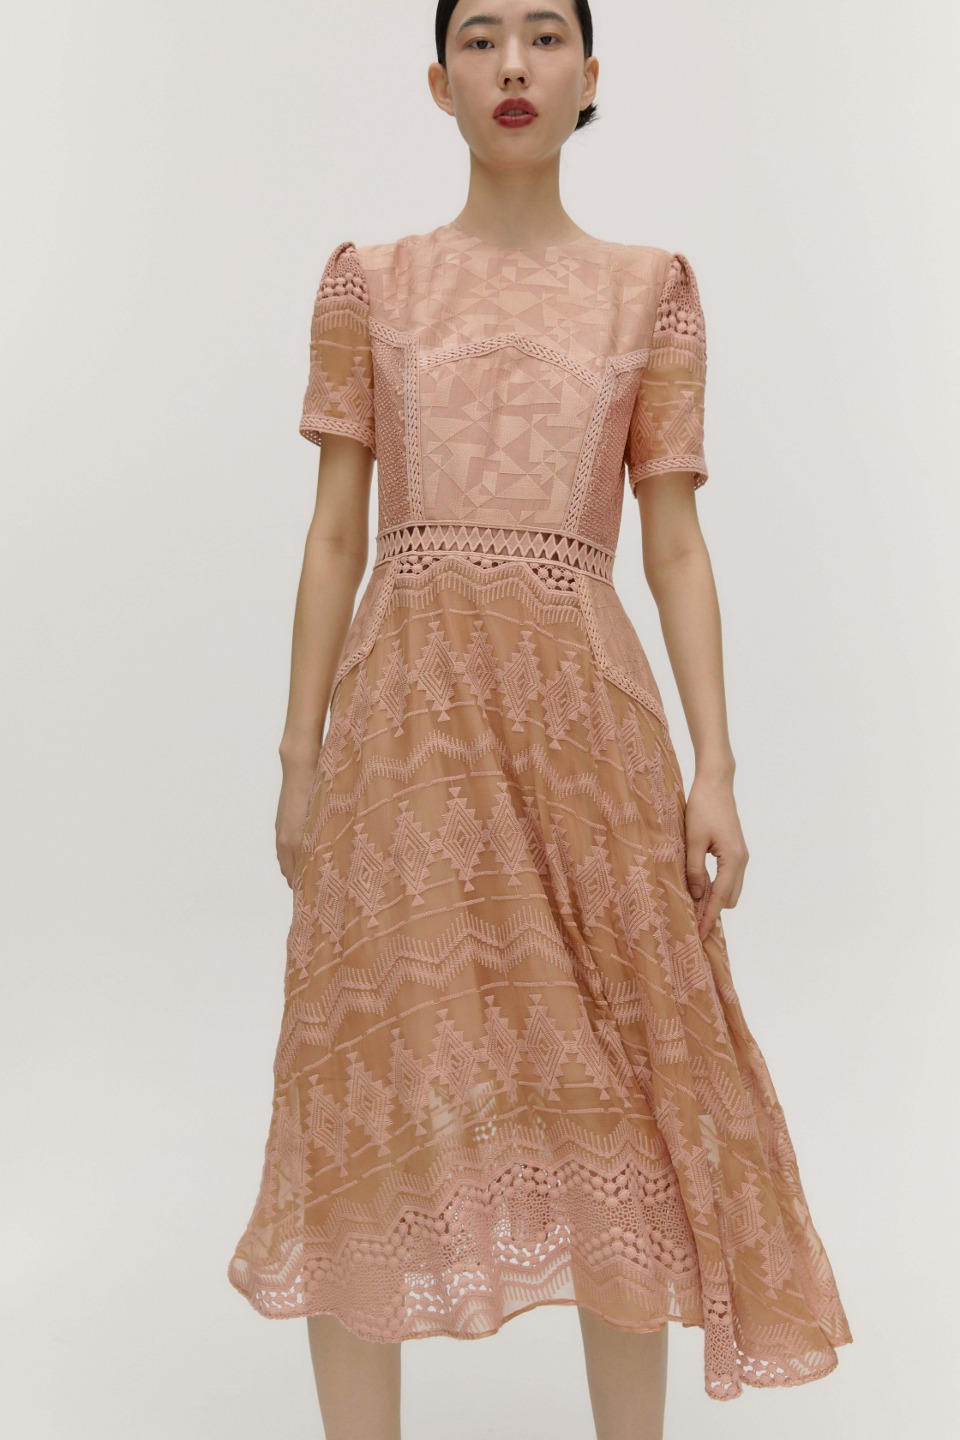 [Custom Order] Needlework Silk lace Dress